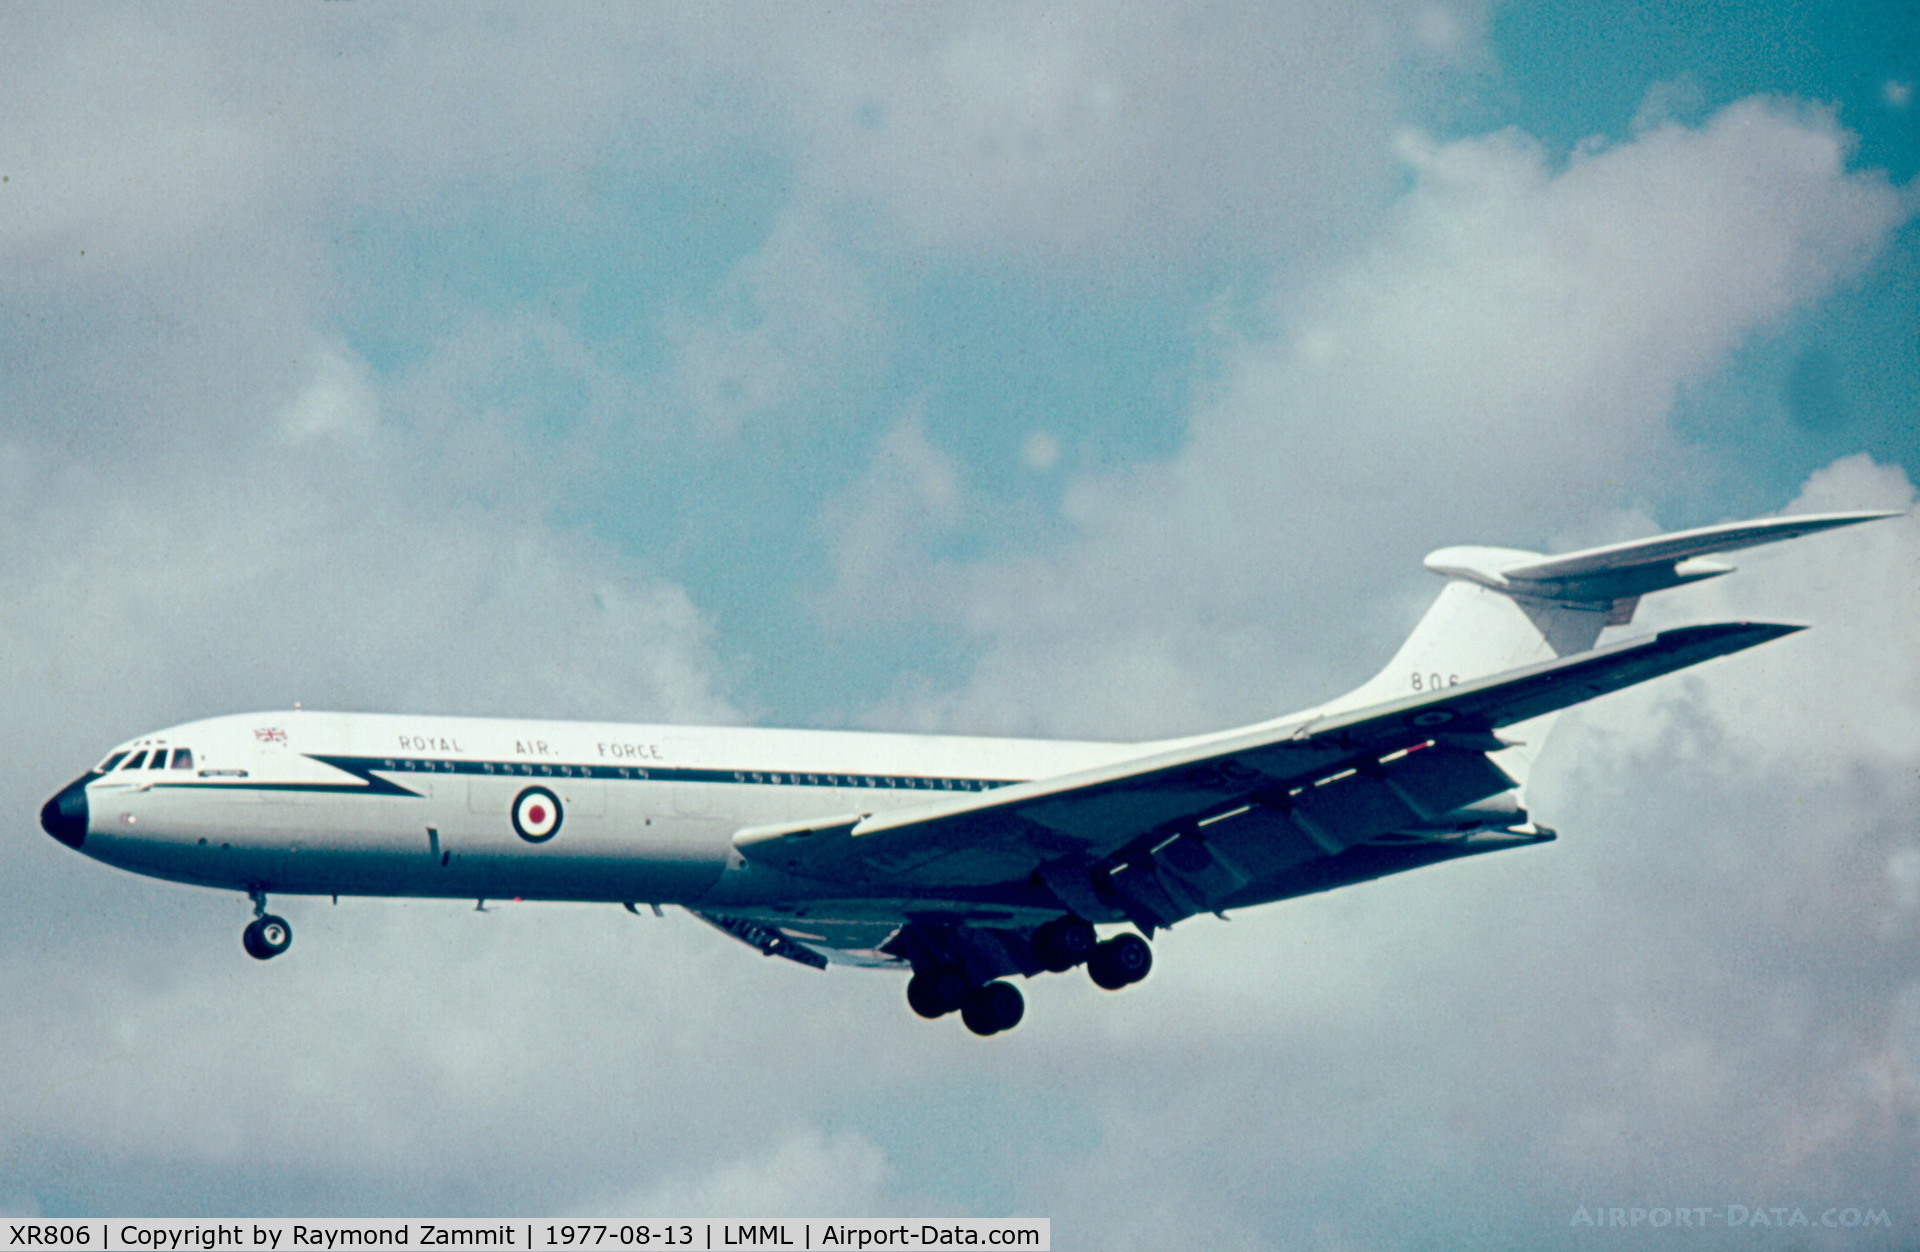 XR806, 1967 Vickers VC10 C.1K C/N 826, Vickers VC10 XR806 Royal Air Force